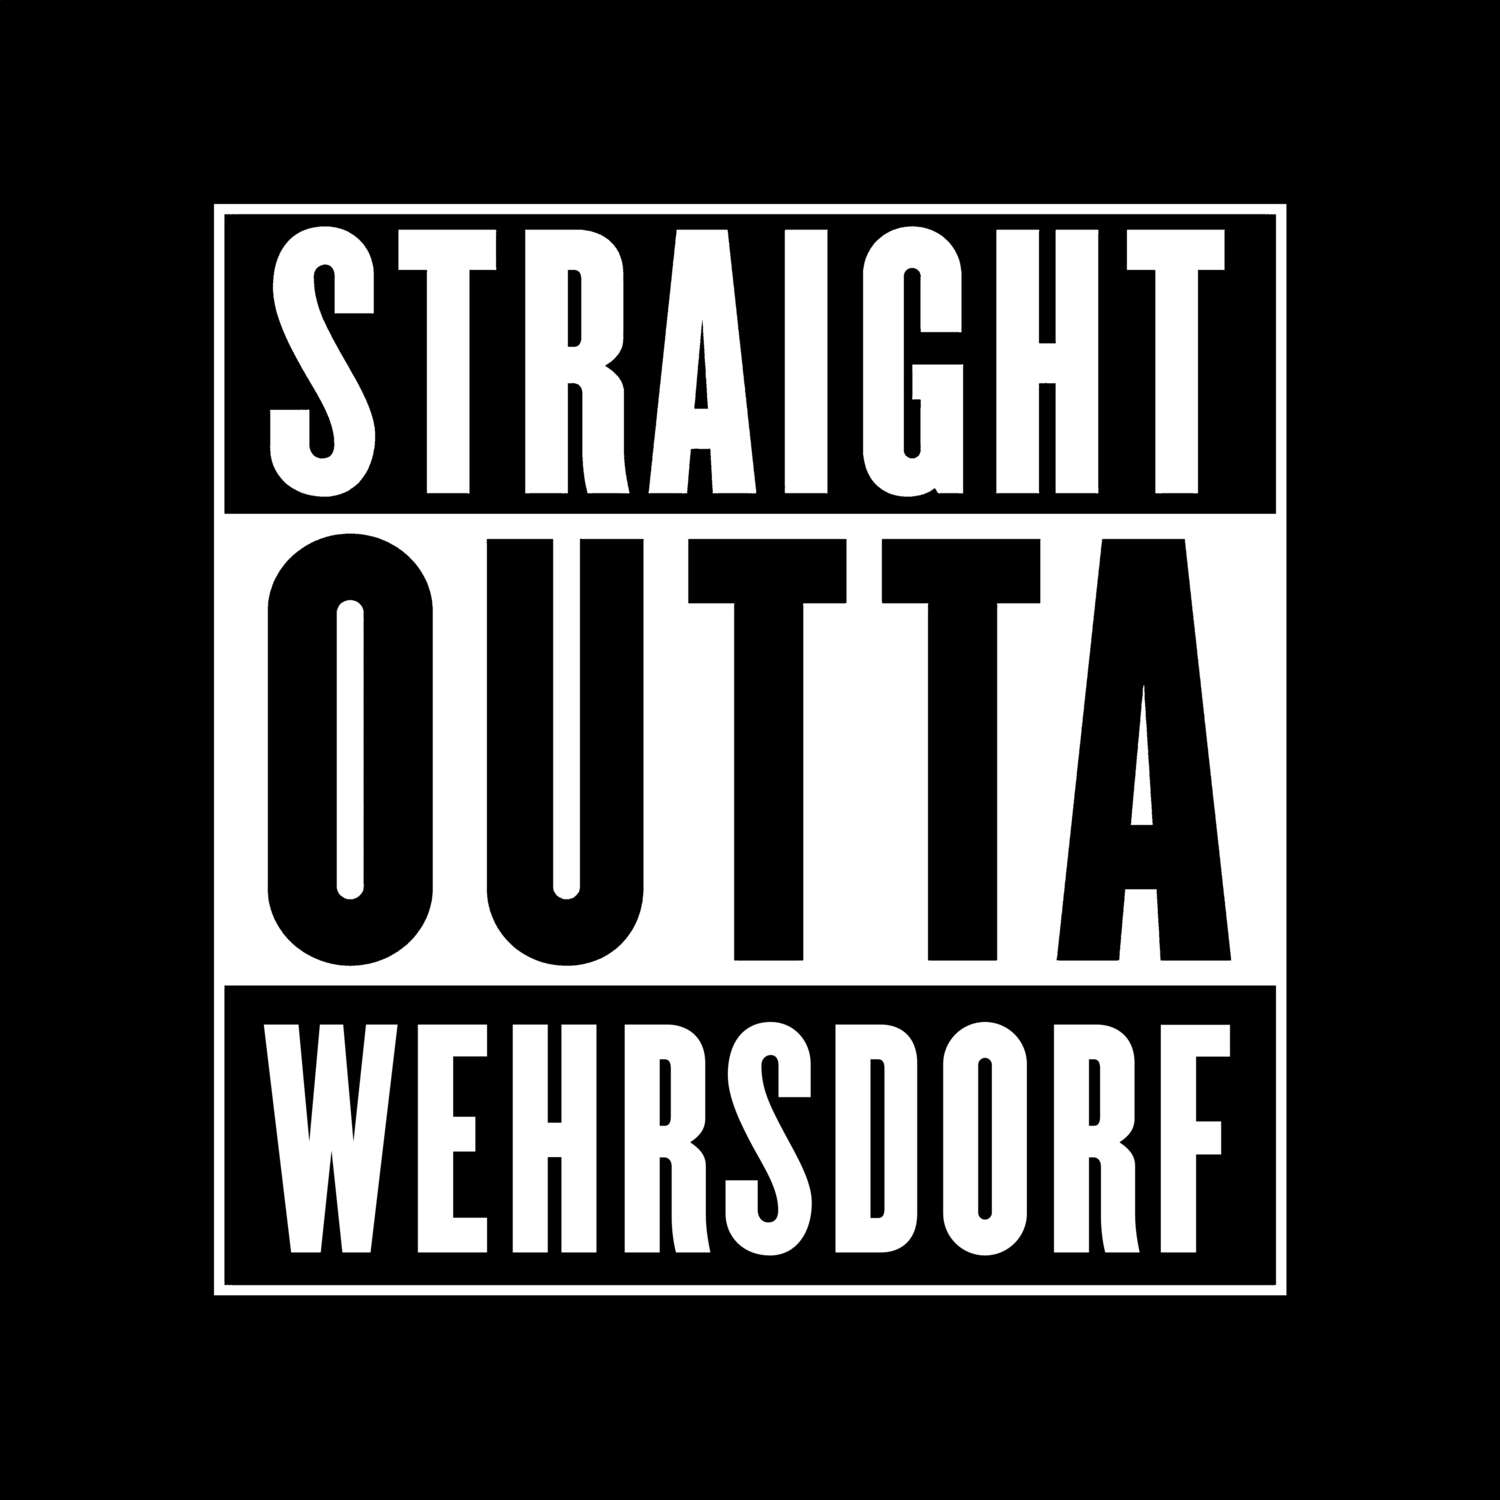 Wehrsdorf T-Shirt »Straight Outta«